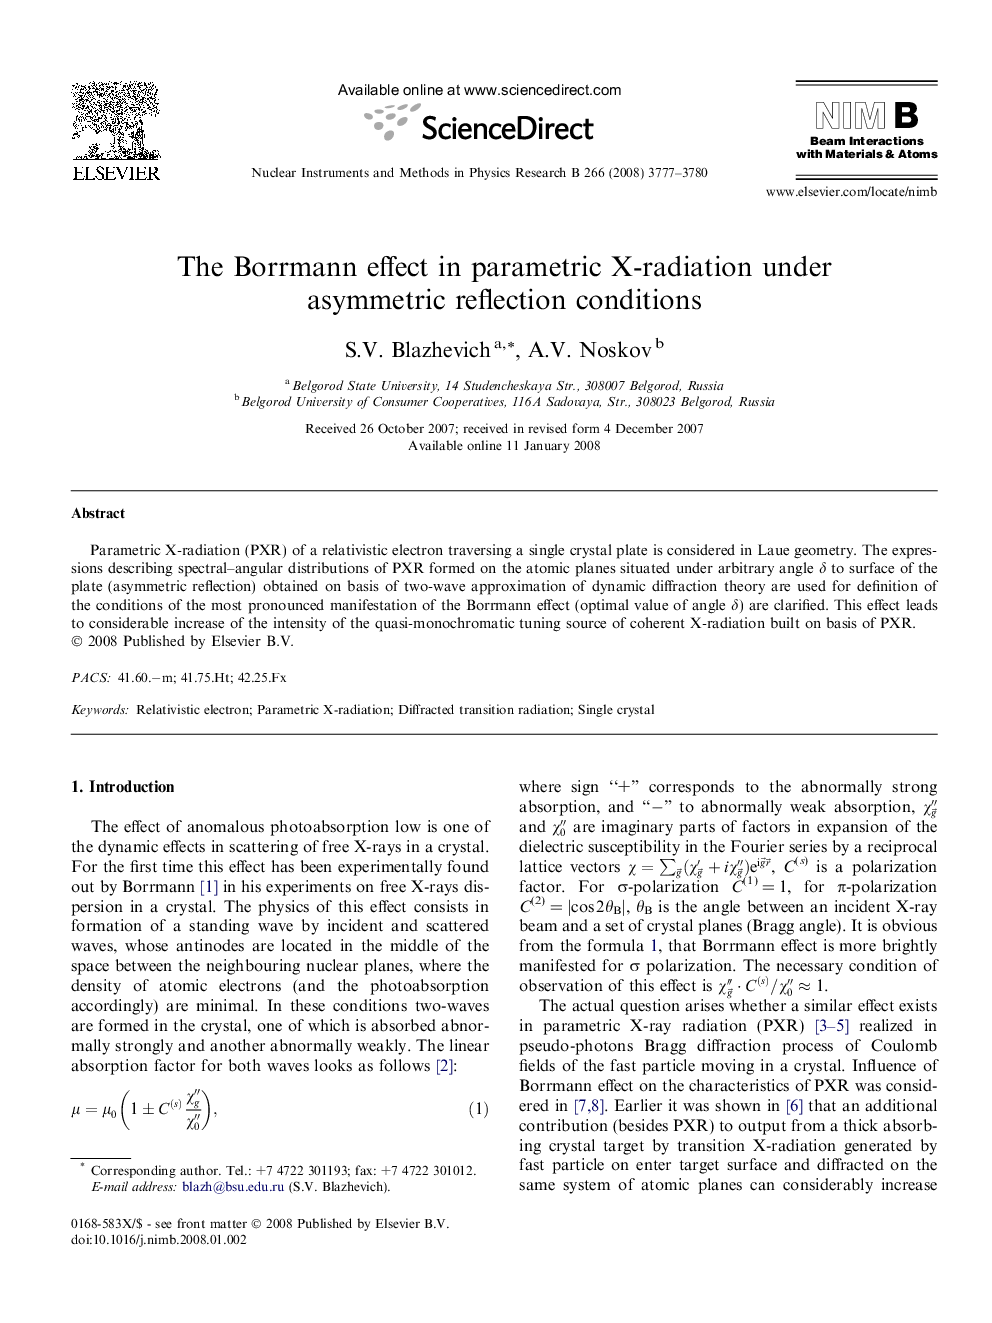 The Borrmann effect in parametric X-radiation under asymmetric reflection conditions